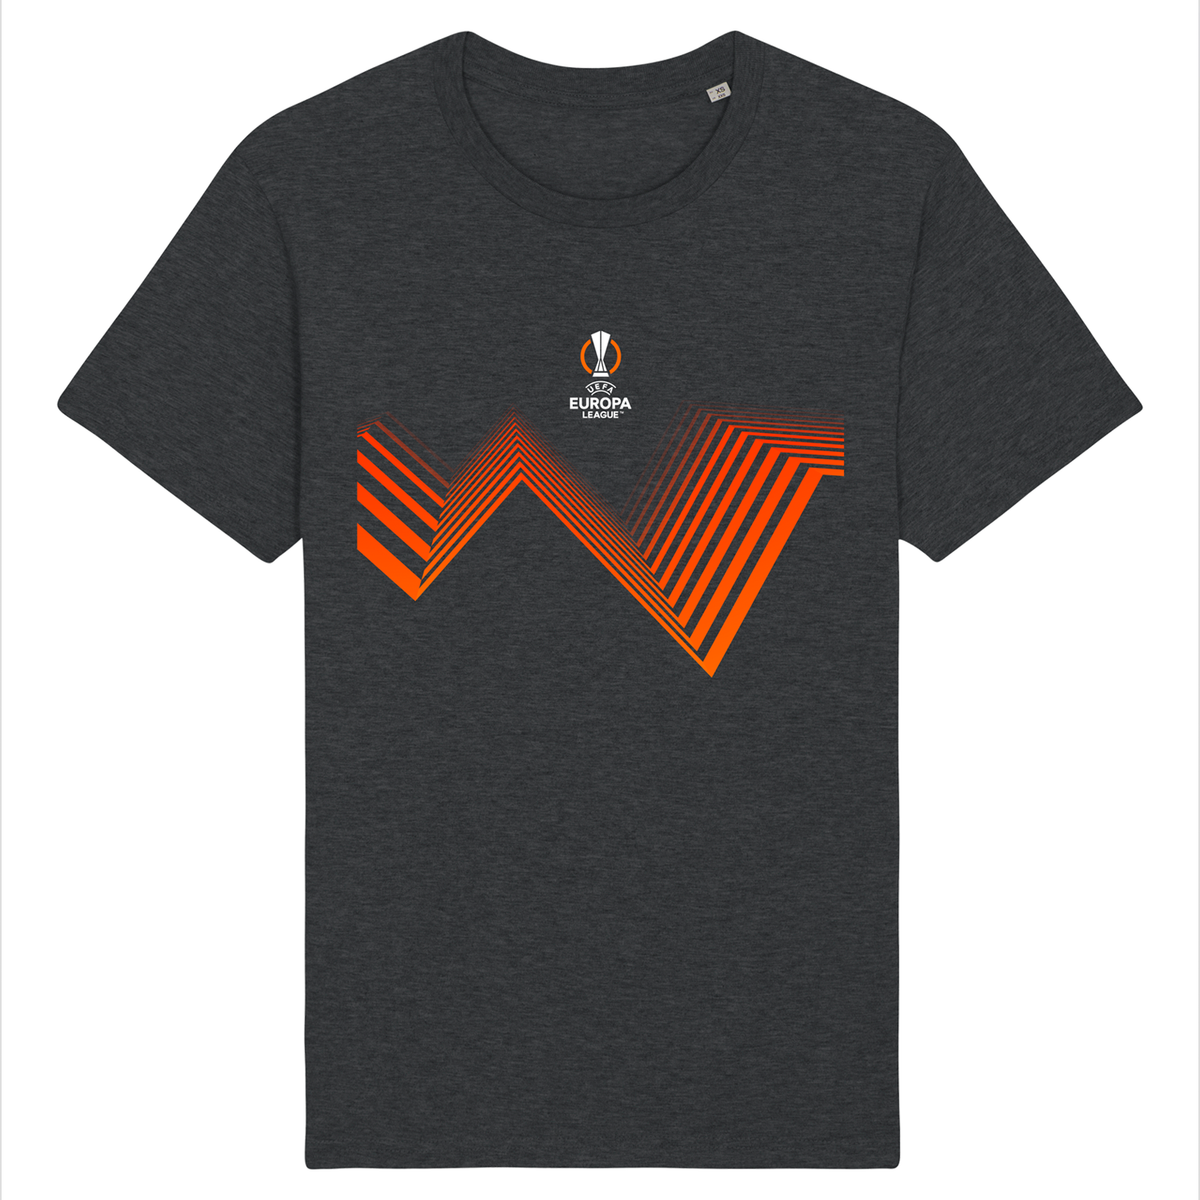 UEFA Europa League - Energy Wave Dark Grey T-Shirt UEFA Club Competitions Online Store